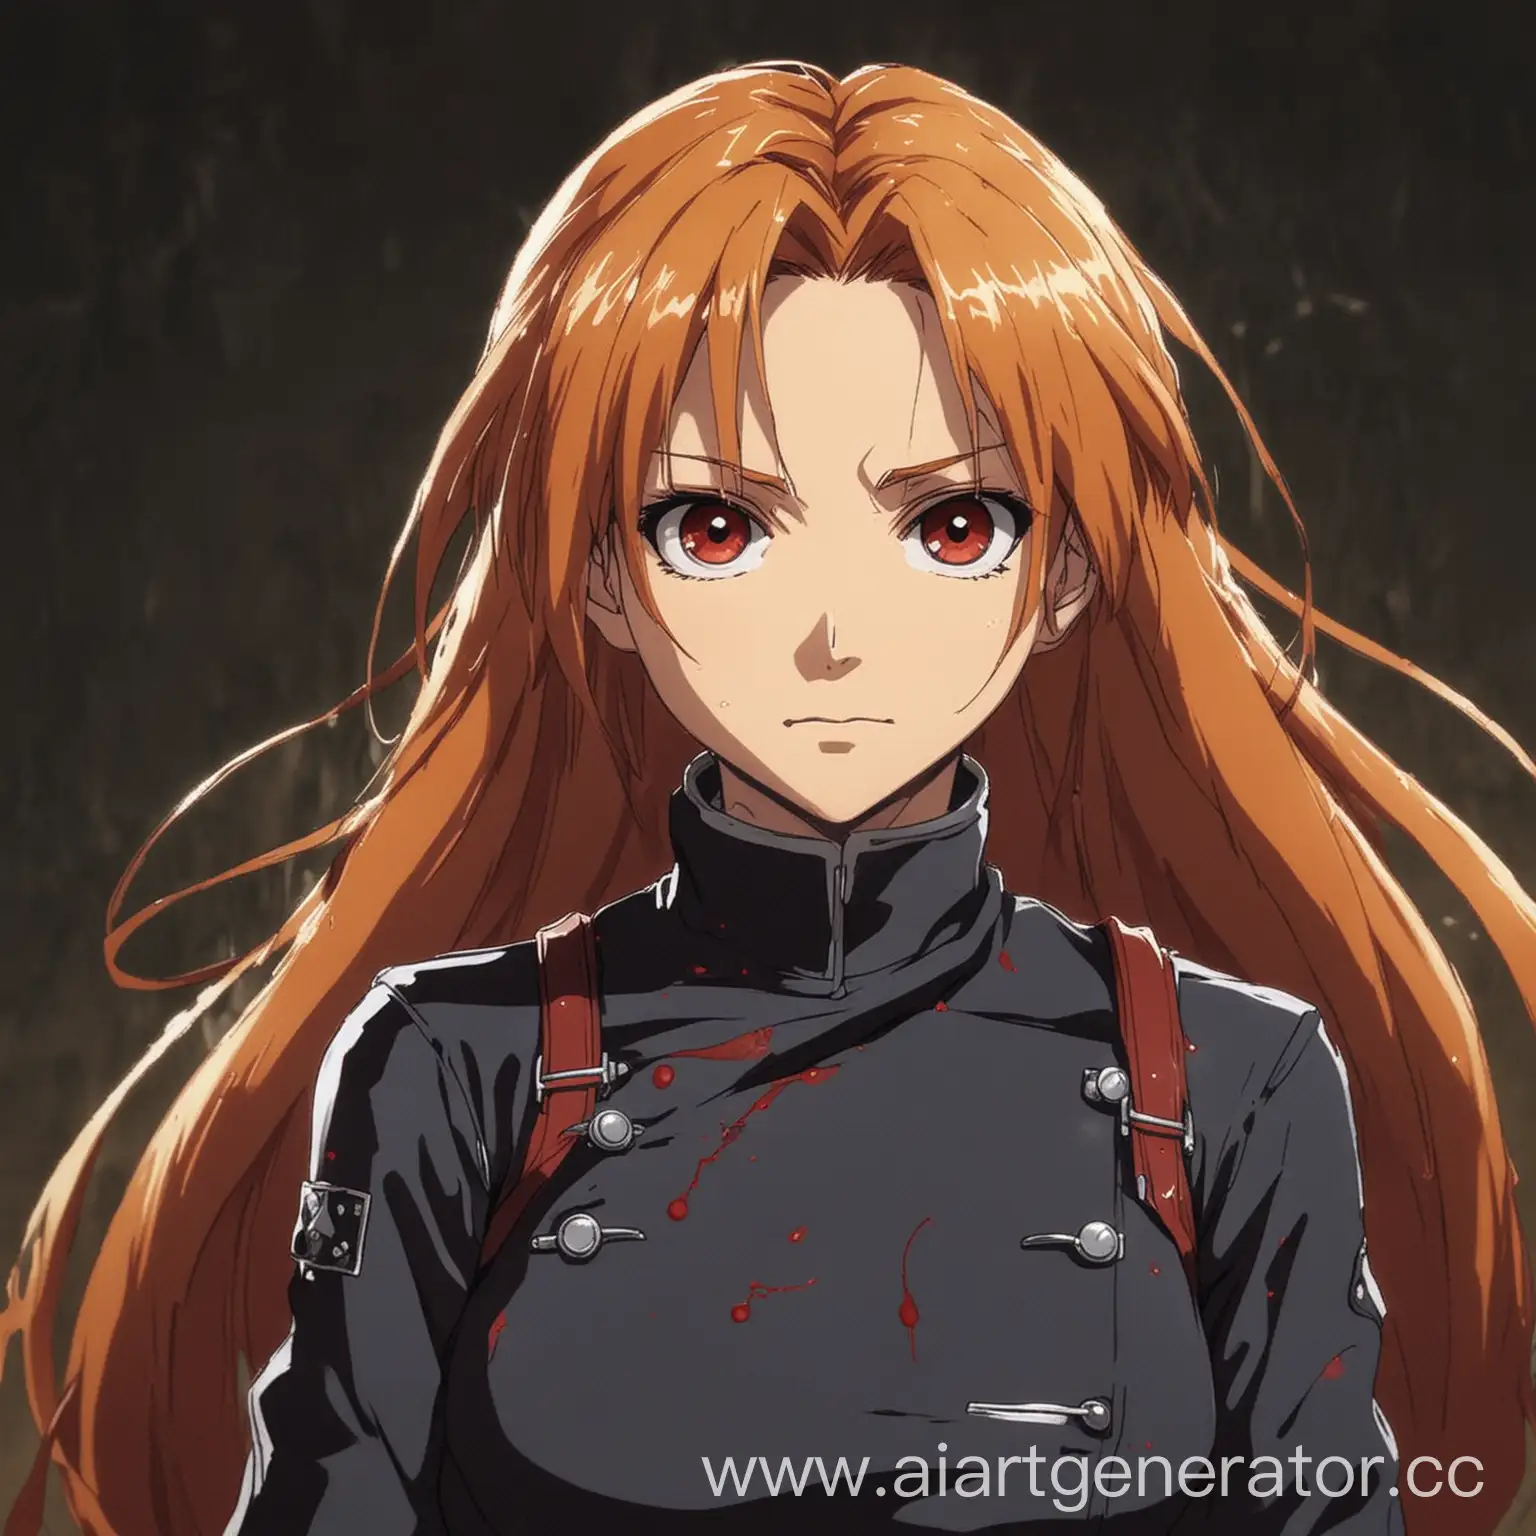 Anime-Girl-with-Ginger-Hair-in-Fullmetal-Alchemist-Style